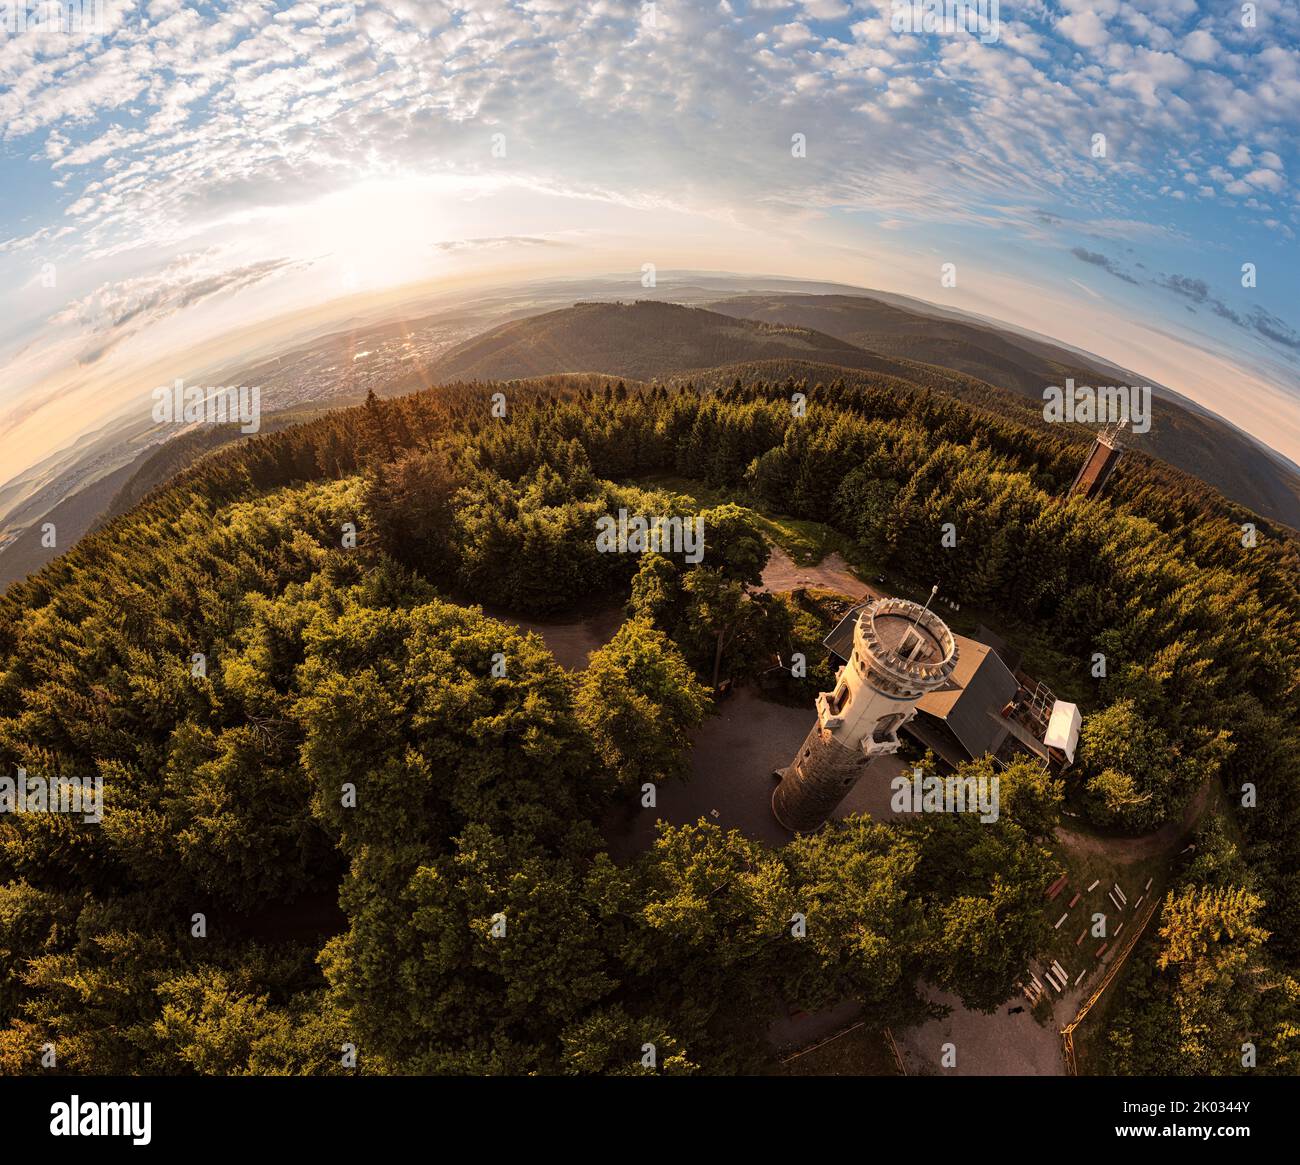 Germania, Turingia, Ilmenau, Kickelhahn, torre panoramica, ristorante, torre di telecomunicazione (sfondo), alba, foresta, montagne, panorama emisfero Foto Stock